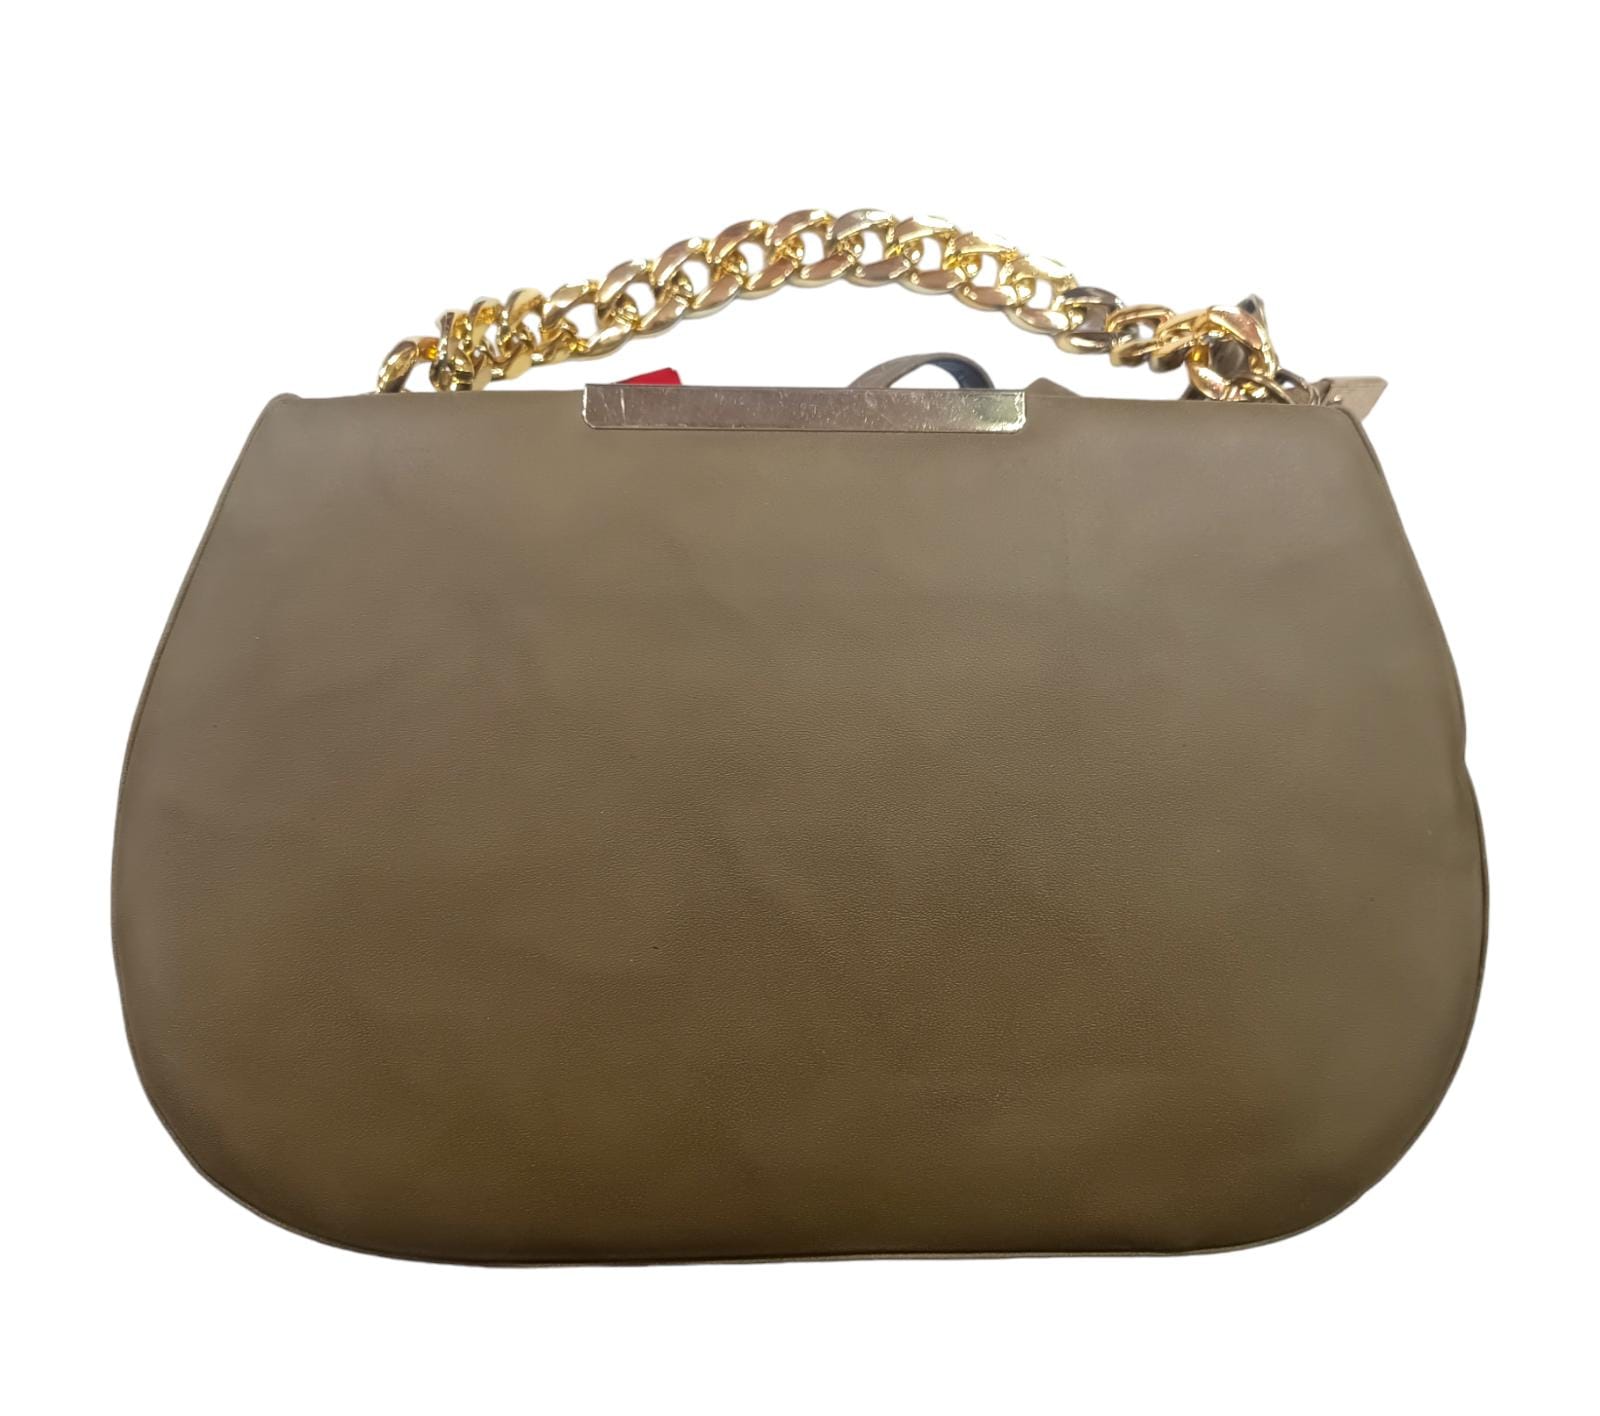  Stylist purse For Girls